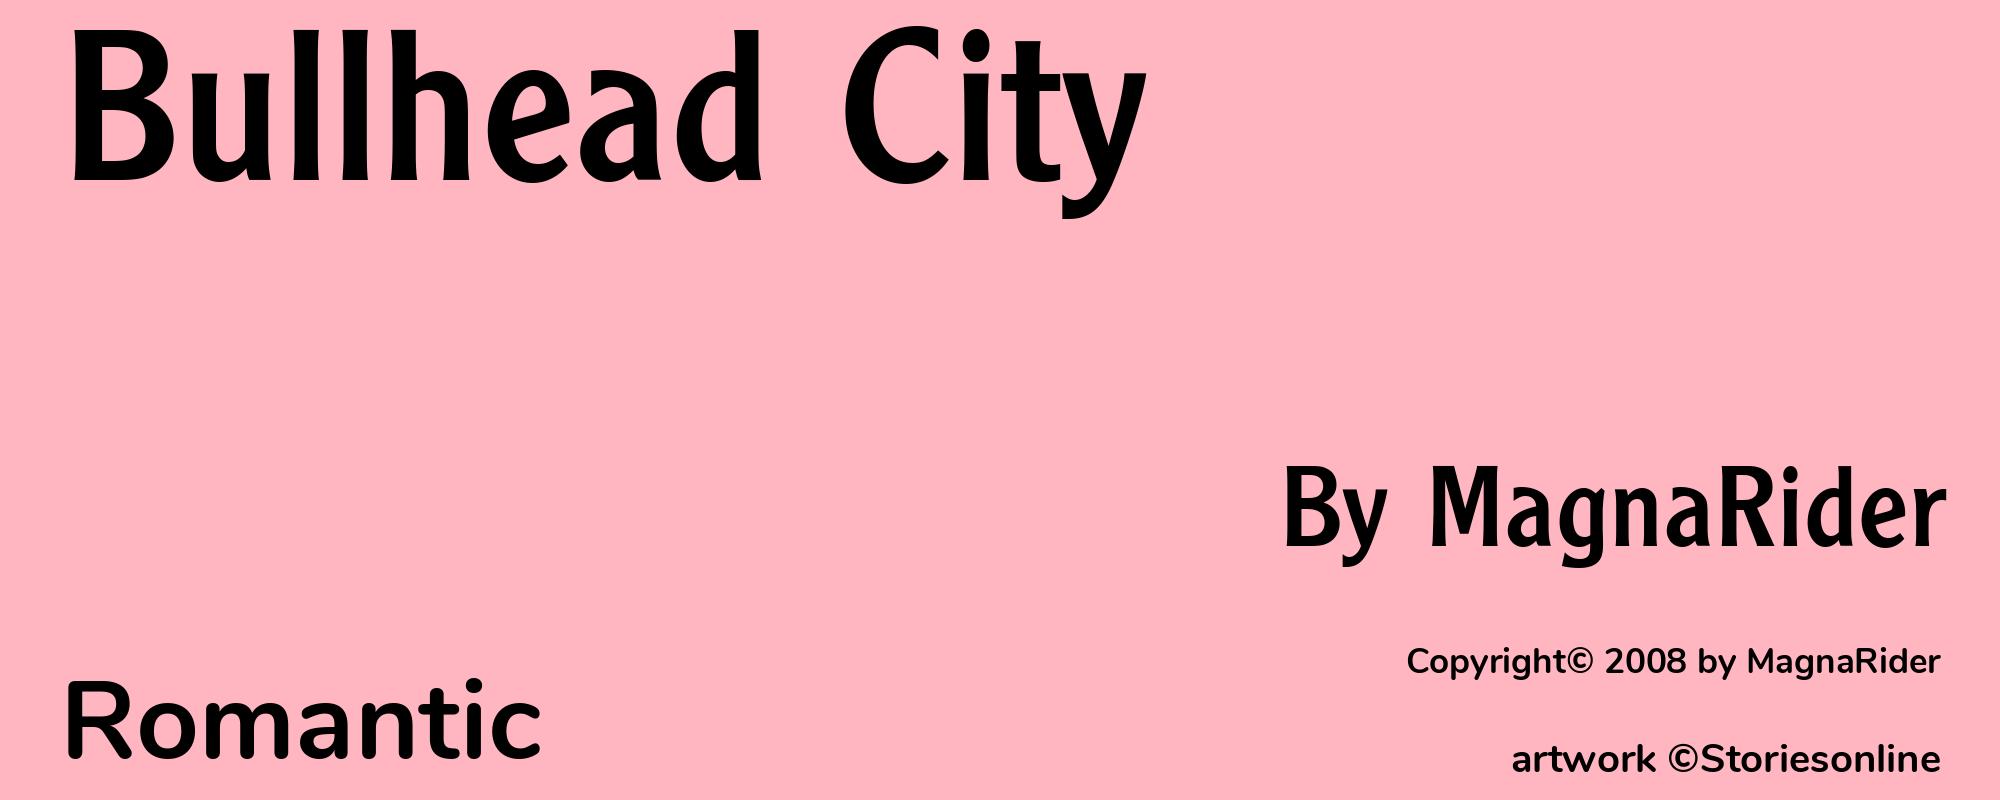 Bullhead City - Cover